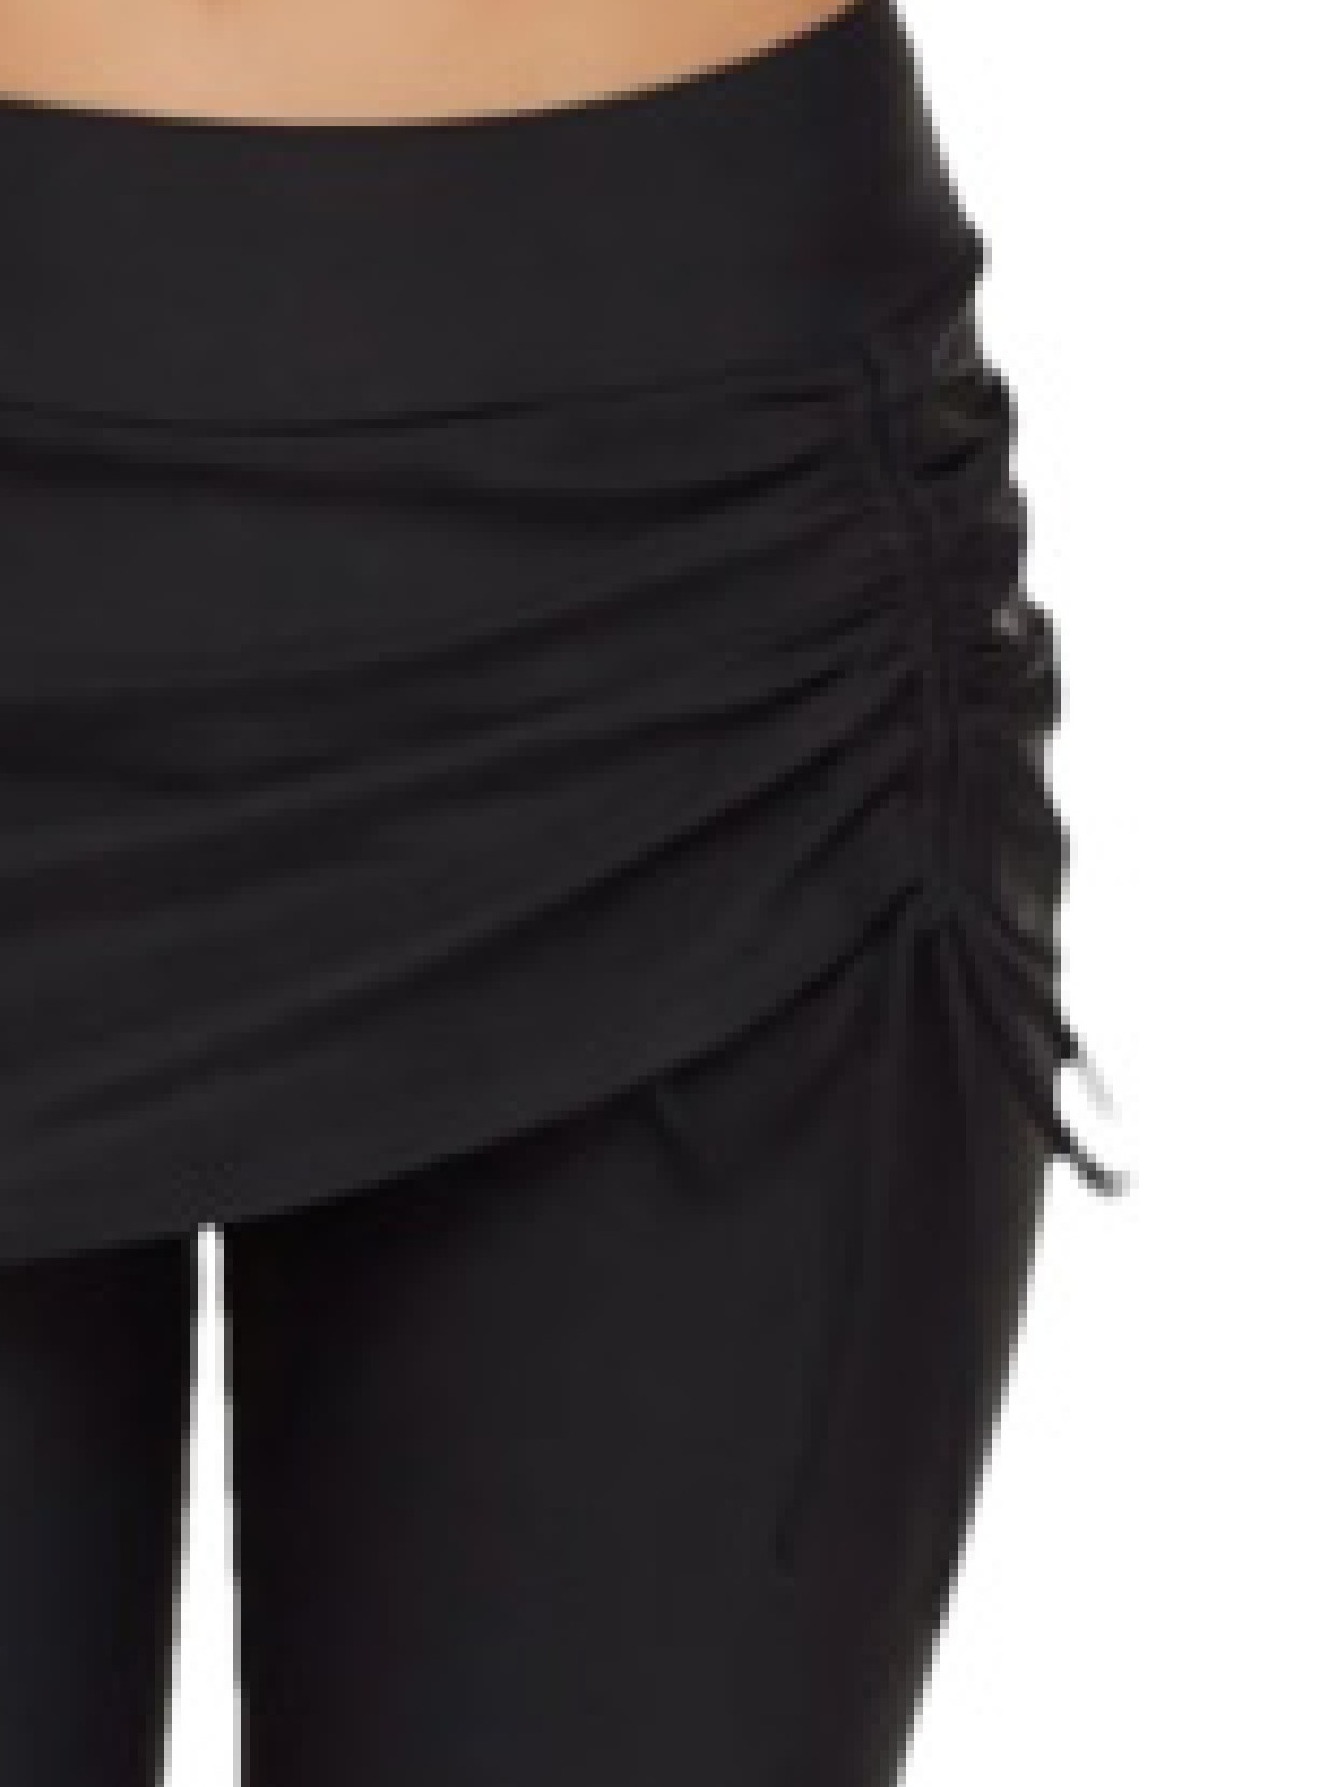 IMIDO Women's Yoga Capri Pants Sport Tights Workout Running Mesh Leggings  with Side Pocket (L, Capri Pants Blue)